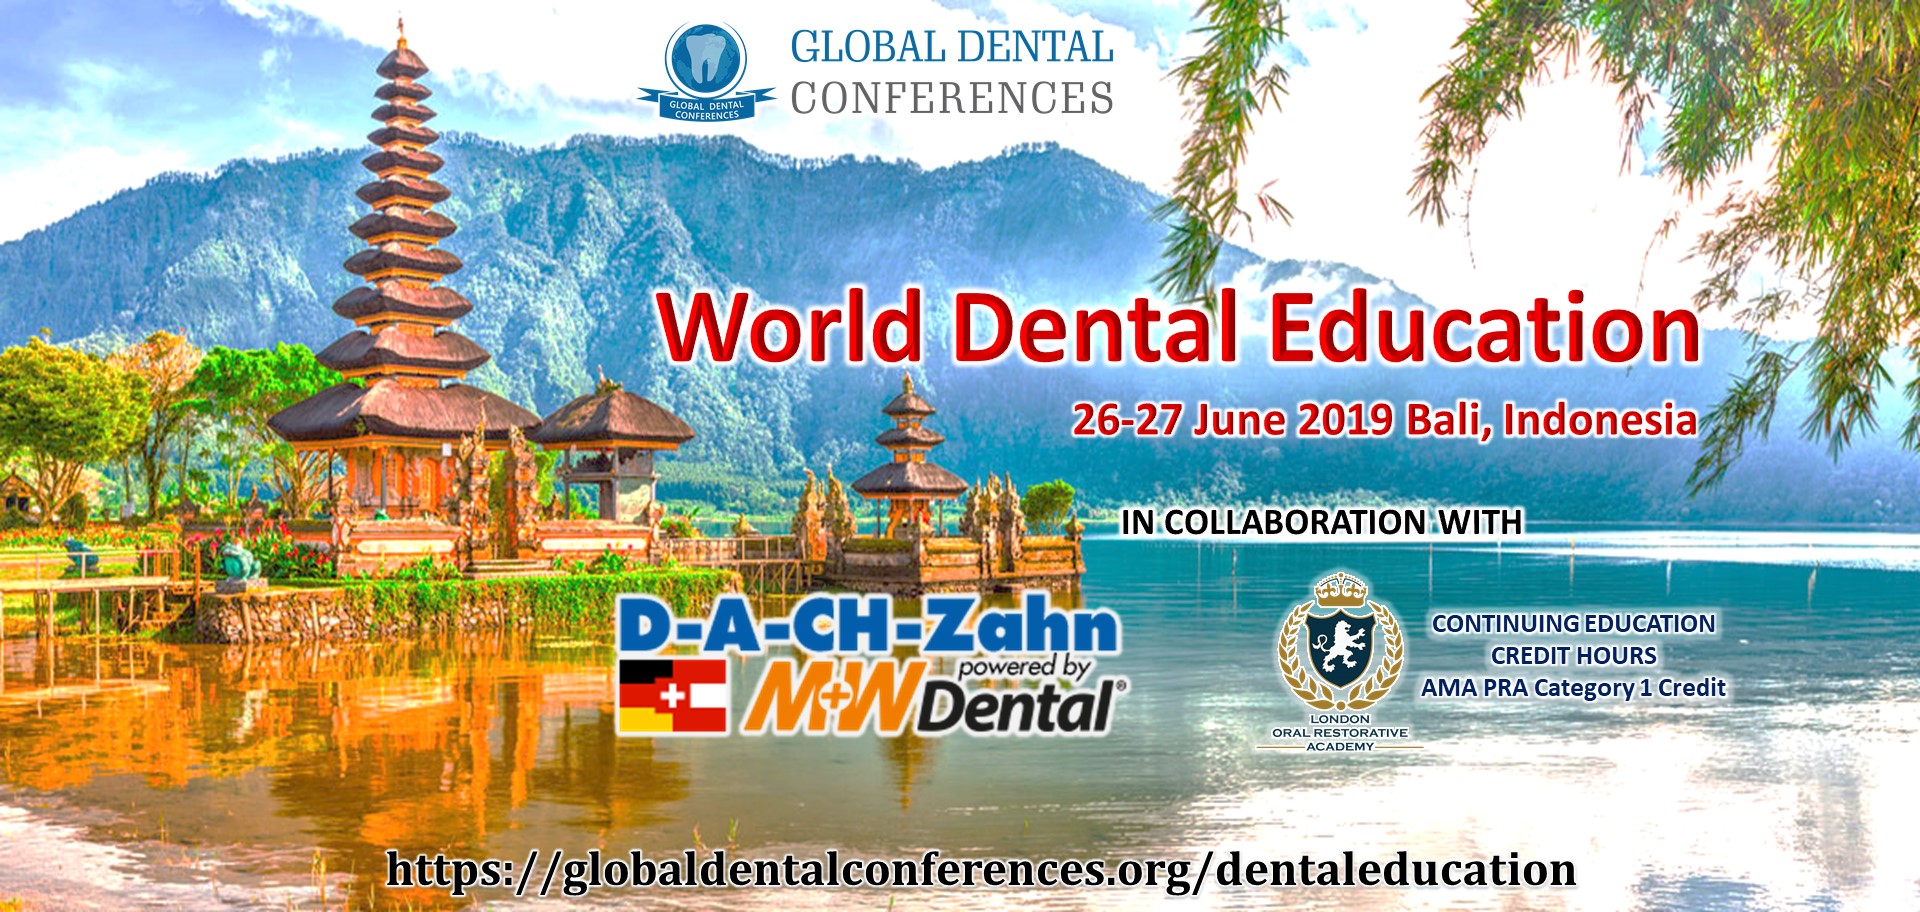 World Dental Education Conference, Grand Inna Kuta, Bali, Indonesia